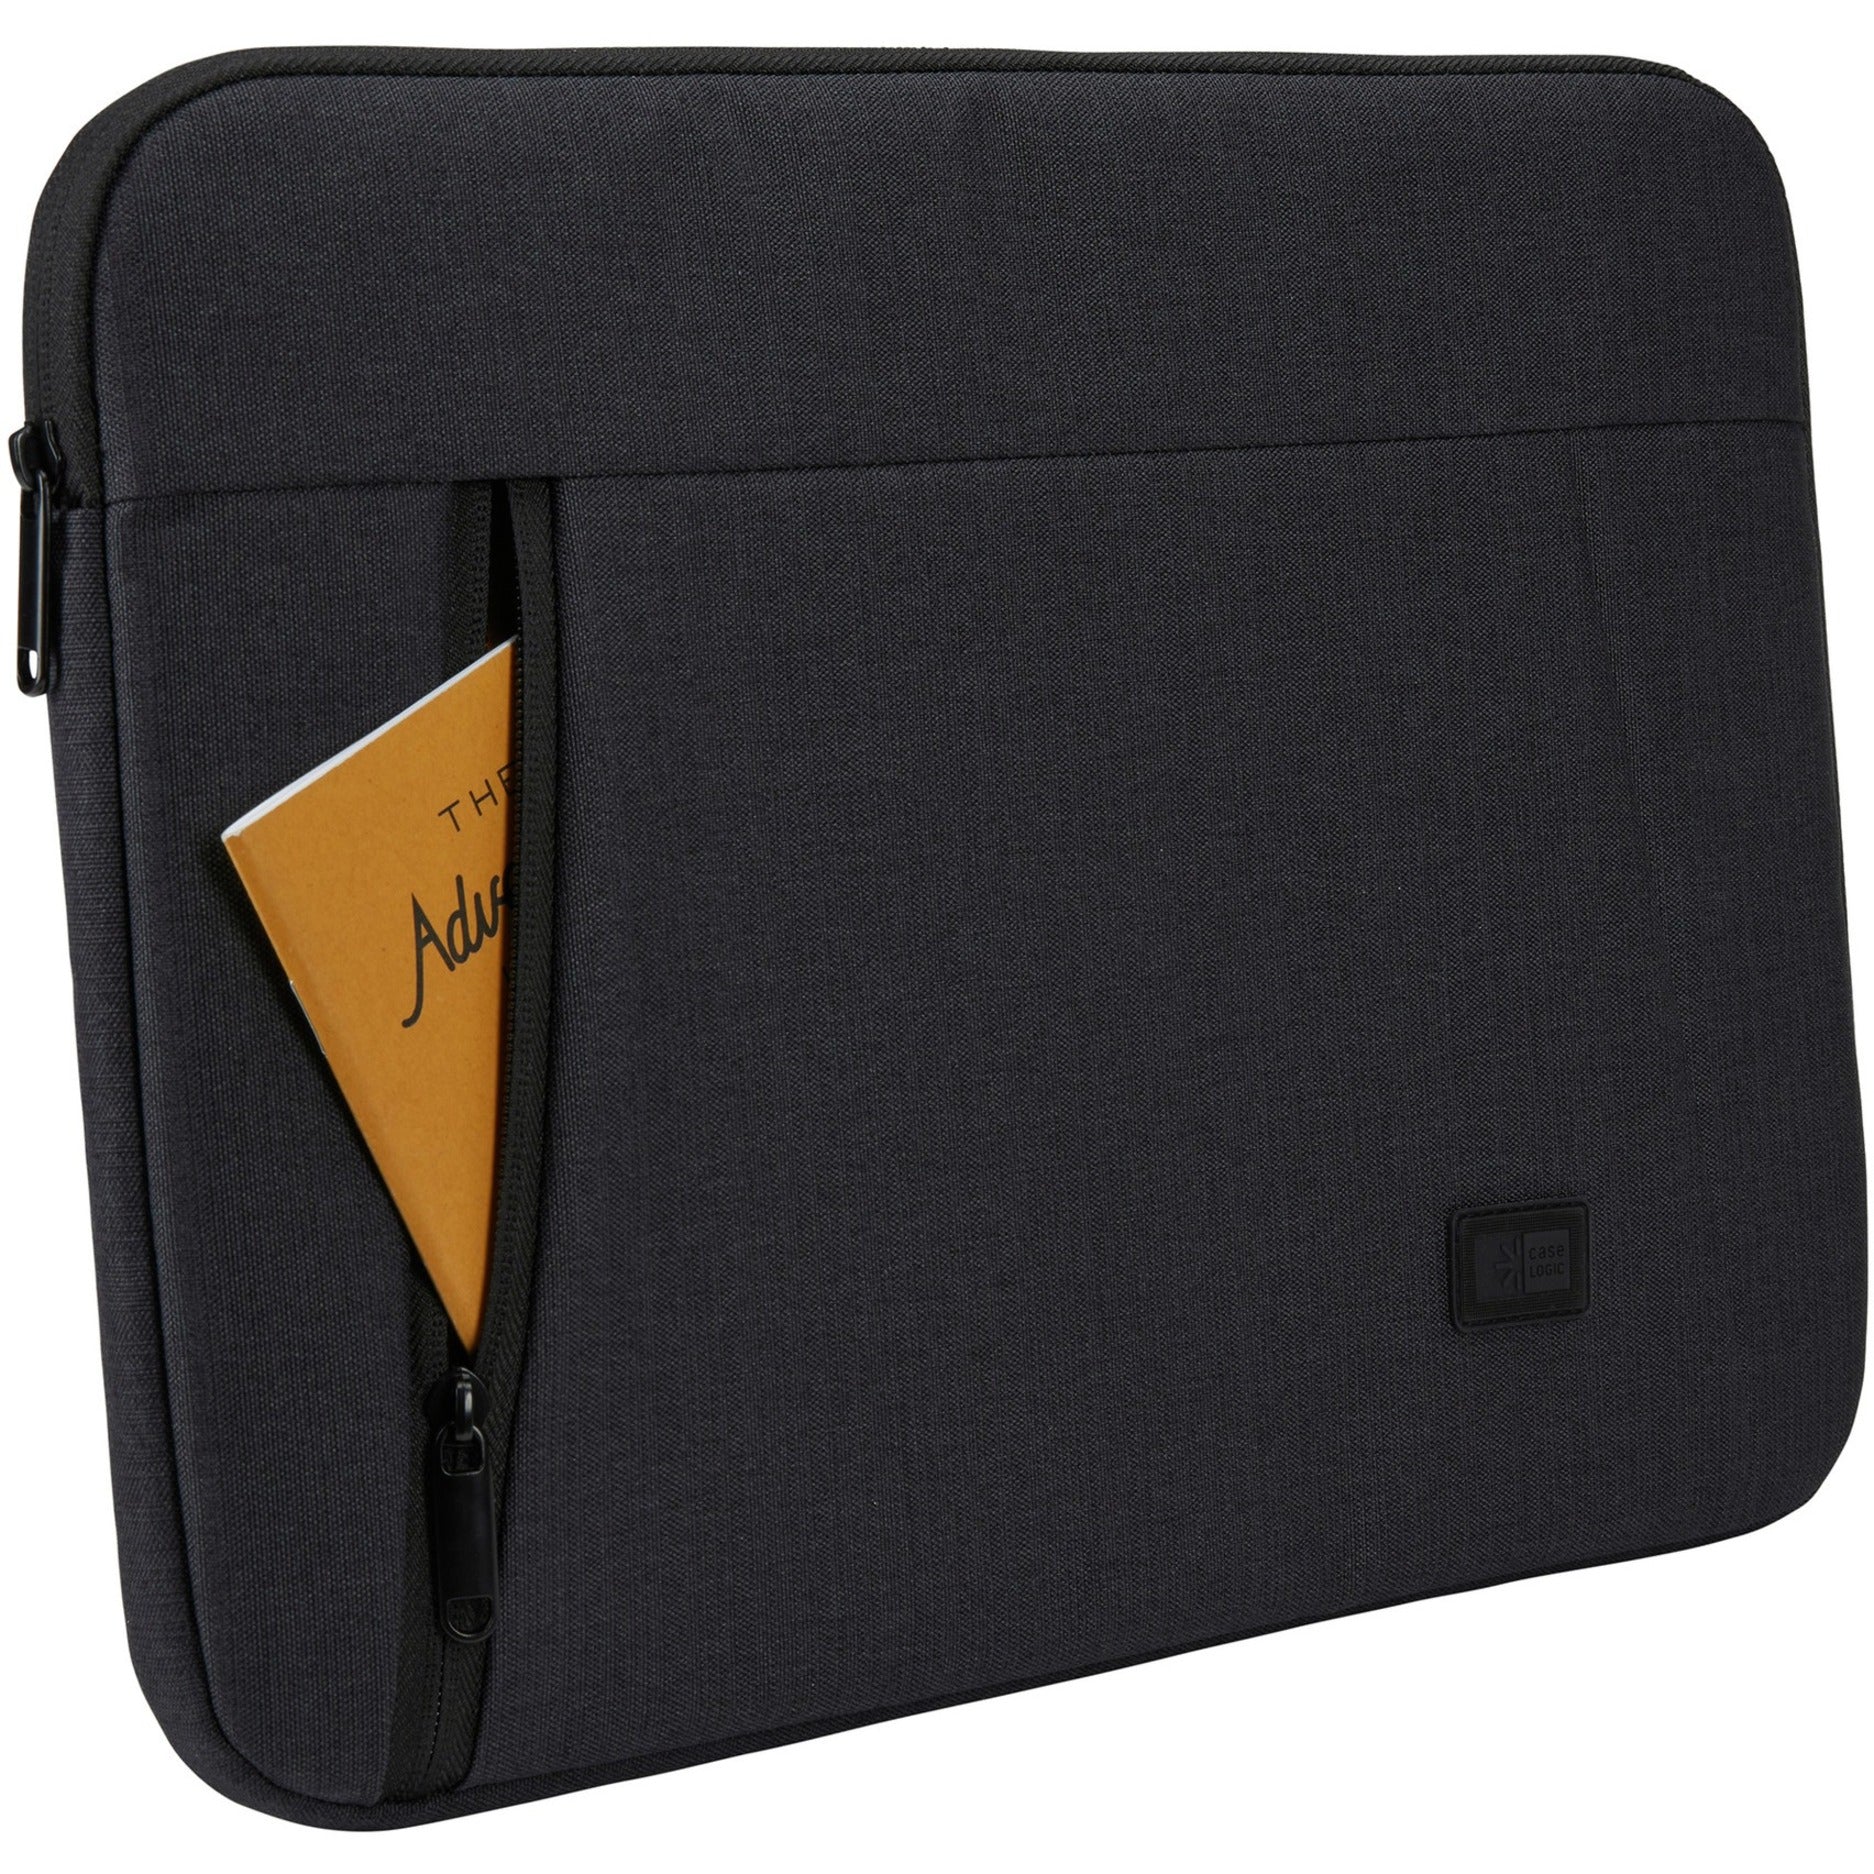 Case Logic 3204641 Huxton 14" Laptop Sleeve, Black Polyester, Zipper Closure